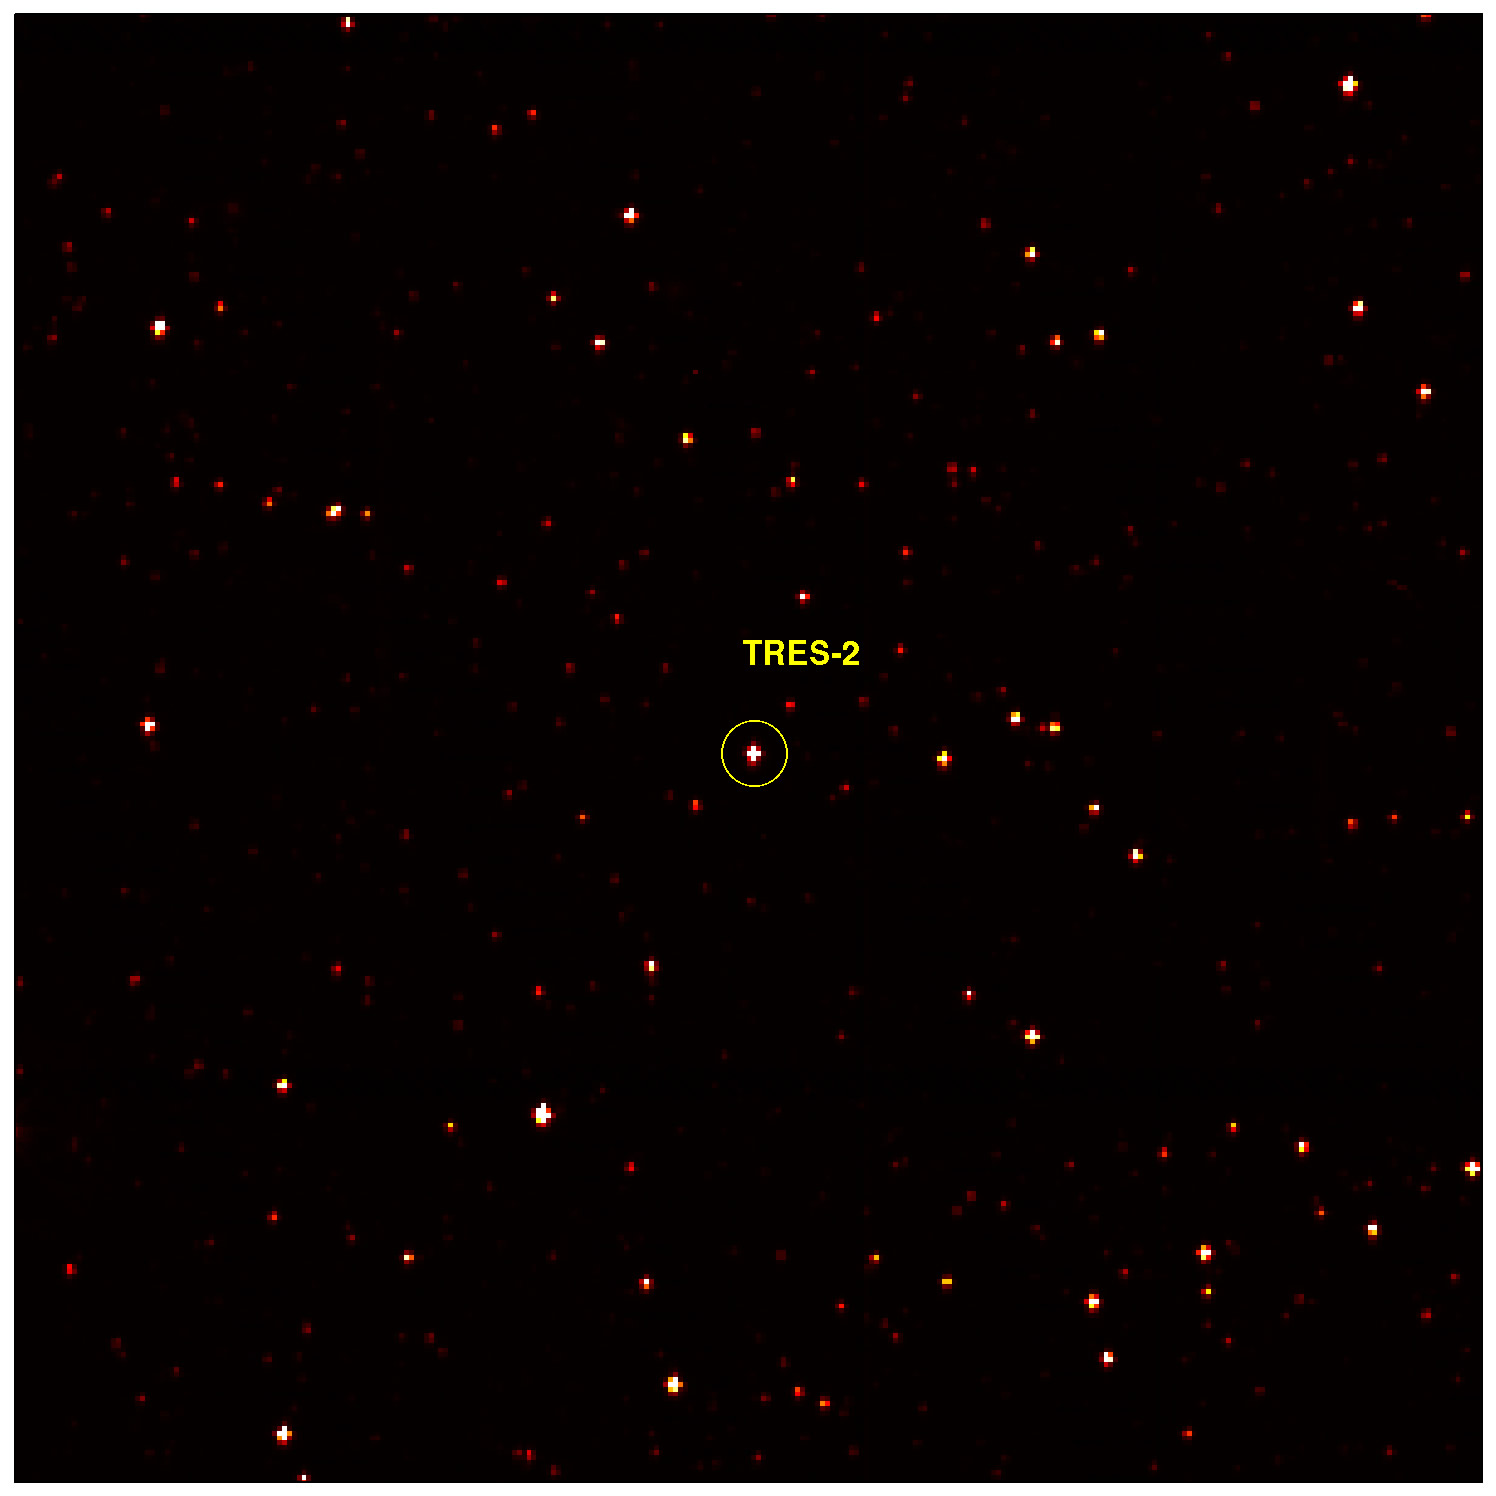 Tres-2 - in Kepler Photometer First Light Image 